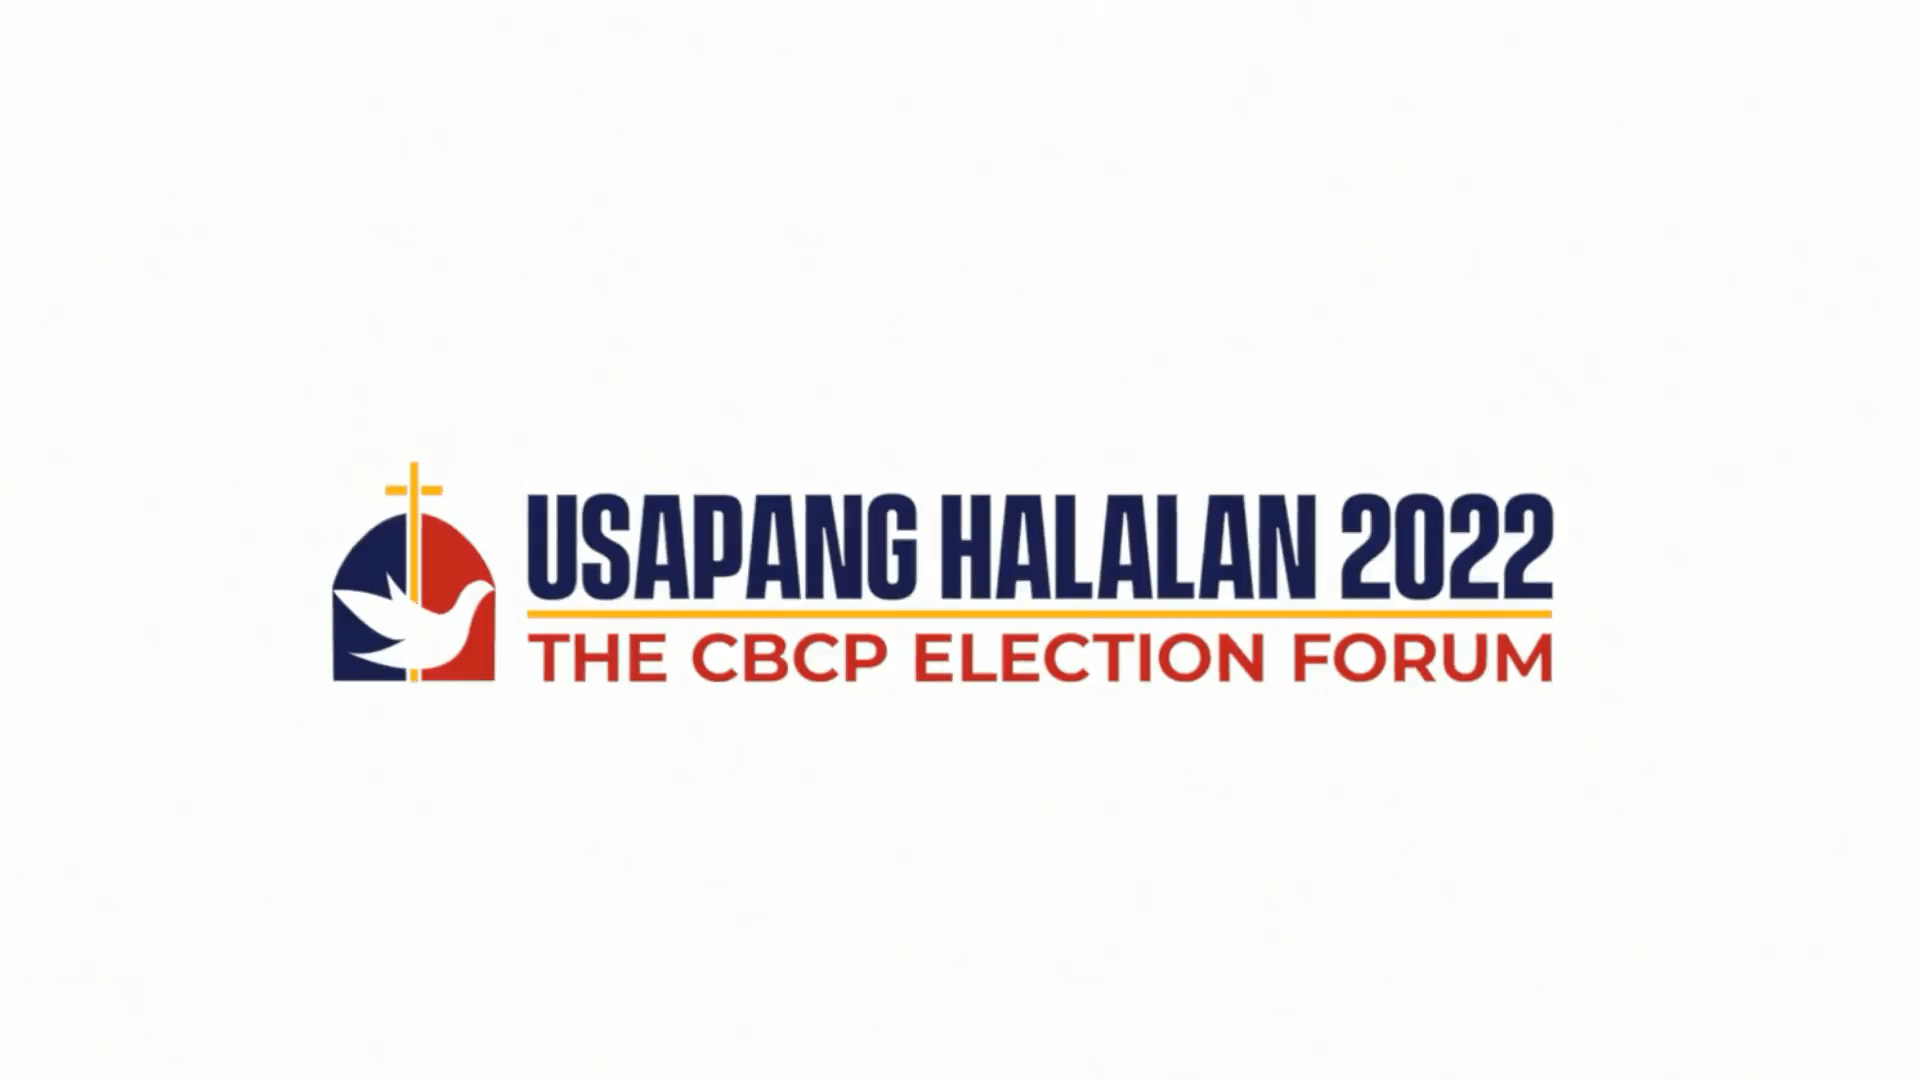 USAPANG HALALAN 2022: The CBCP Election Forum